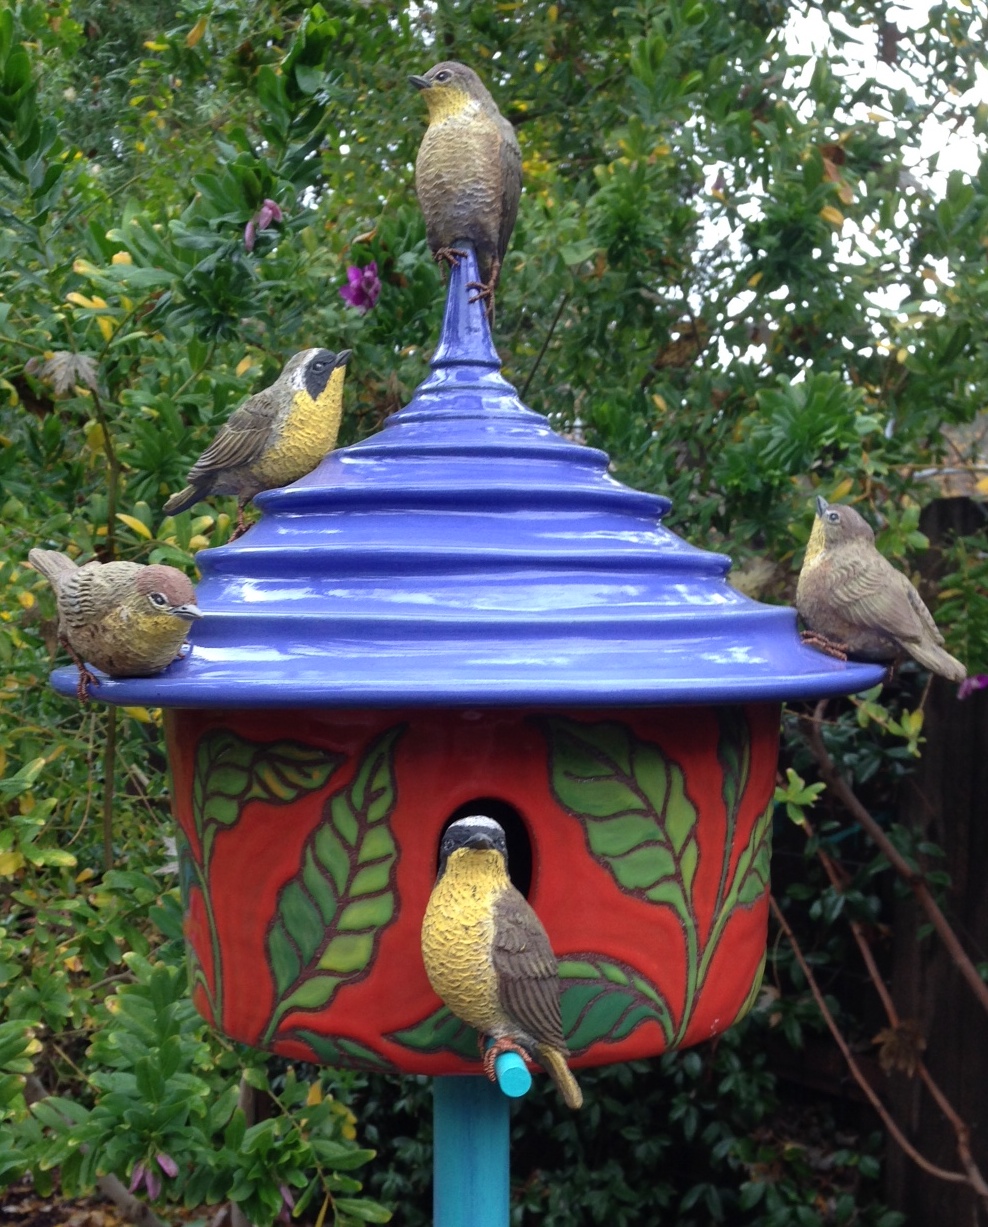 Colorful Ceramic Birdhouse with Yellowthroat Bird Sculptures